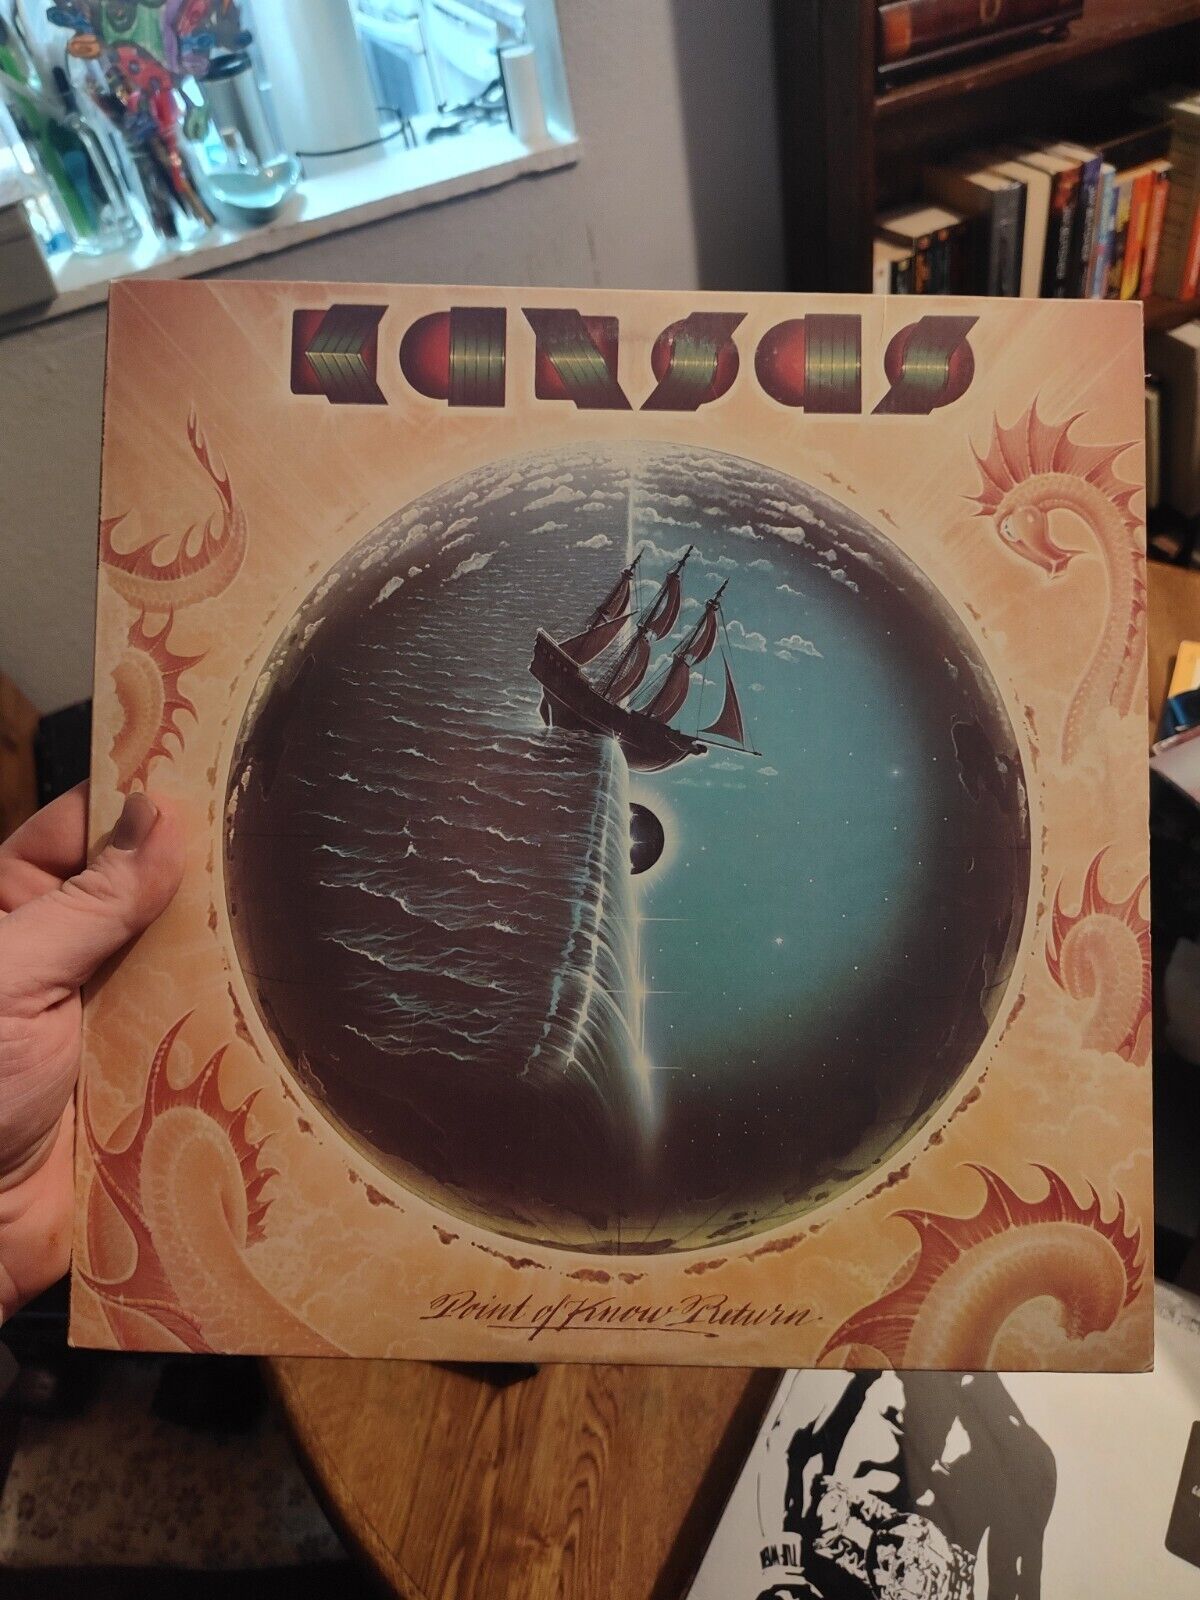 Vintage Original Kansas LP Record - Point of No Return - Album 1977 - Excellent